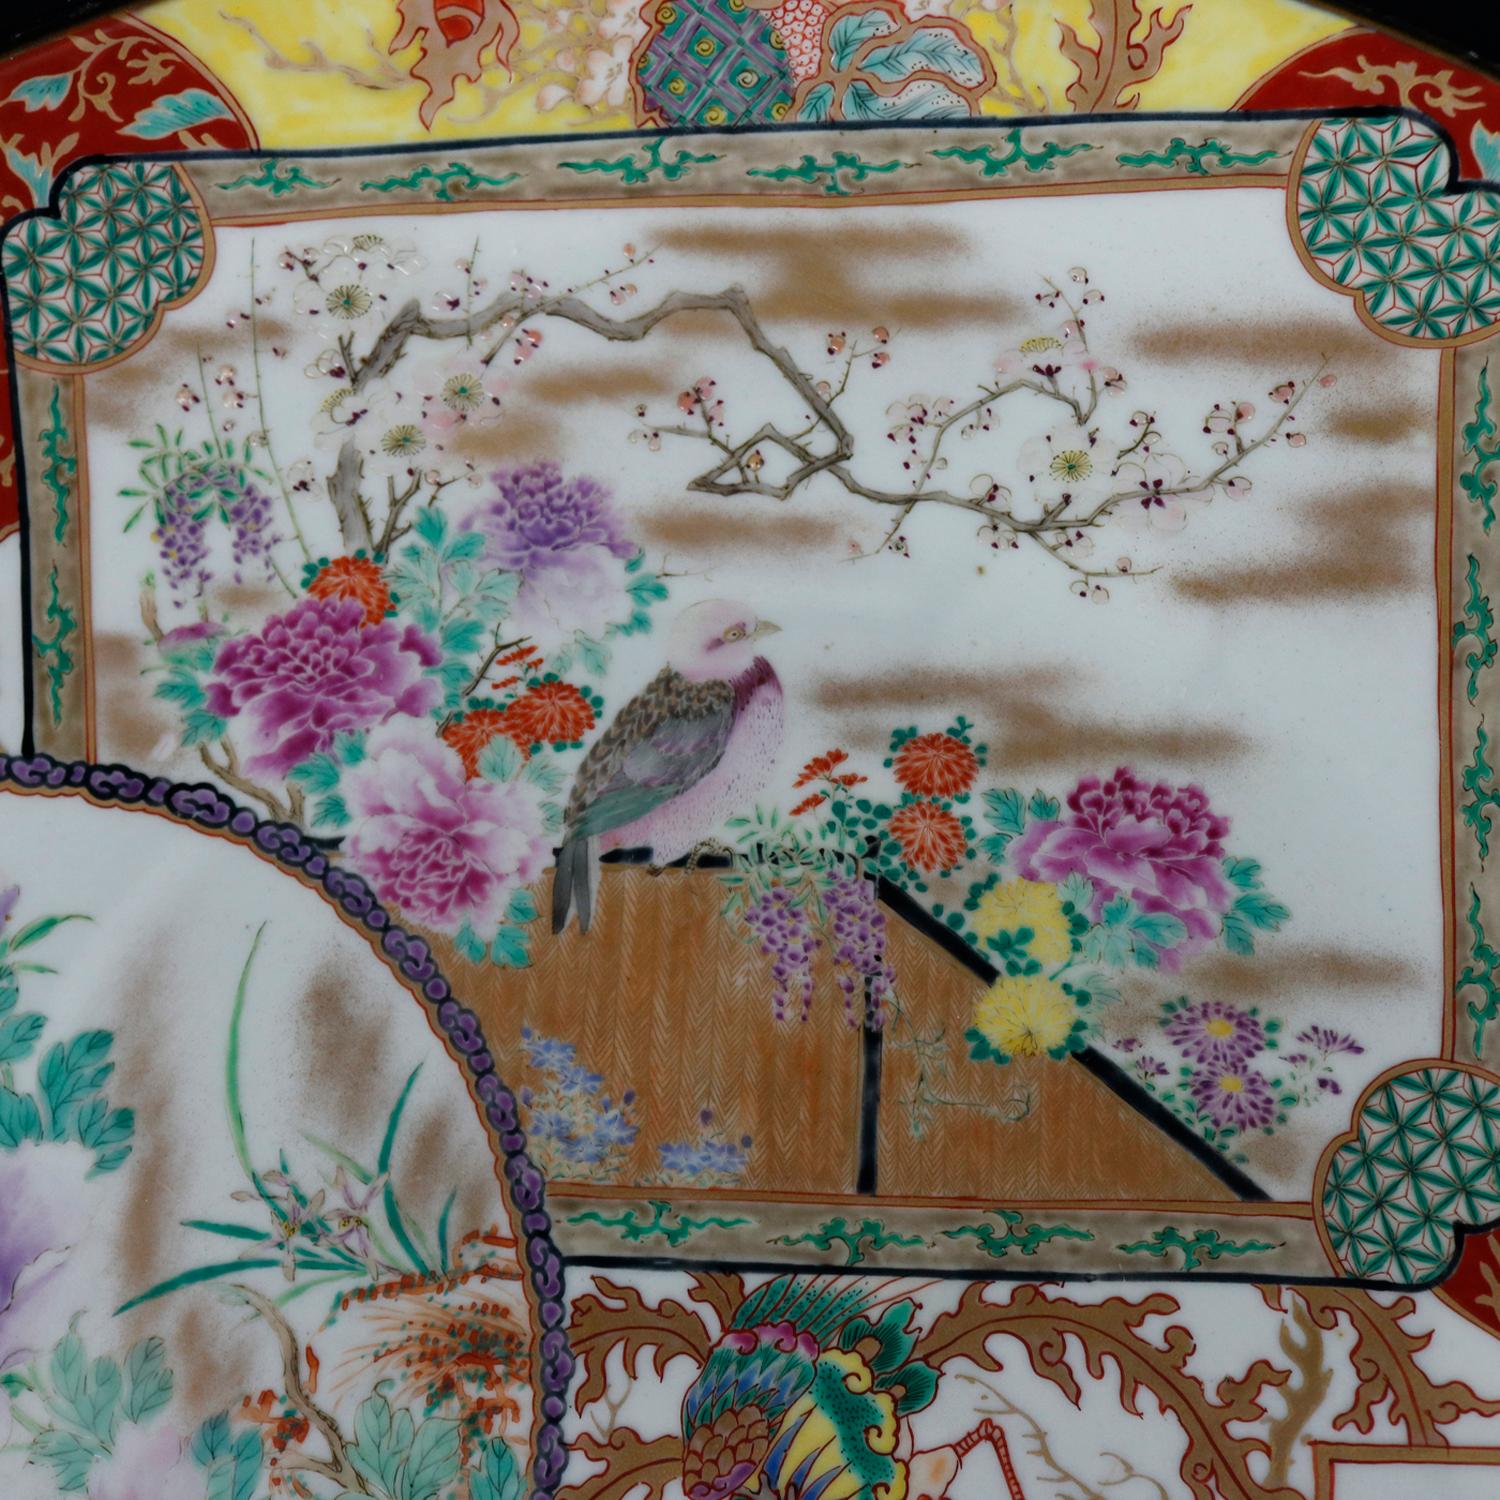 Enameled Antique Japanese Imari Porcelain Charger by Hichozan Shimpo Signed, 19th Century